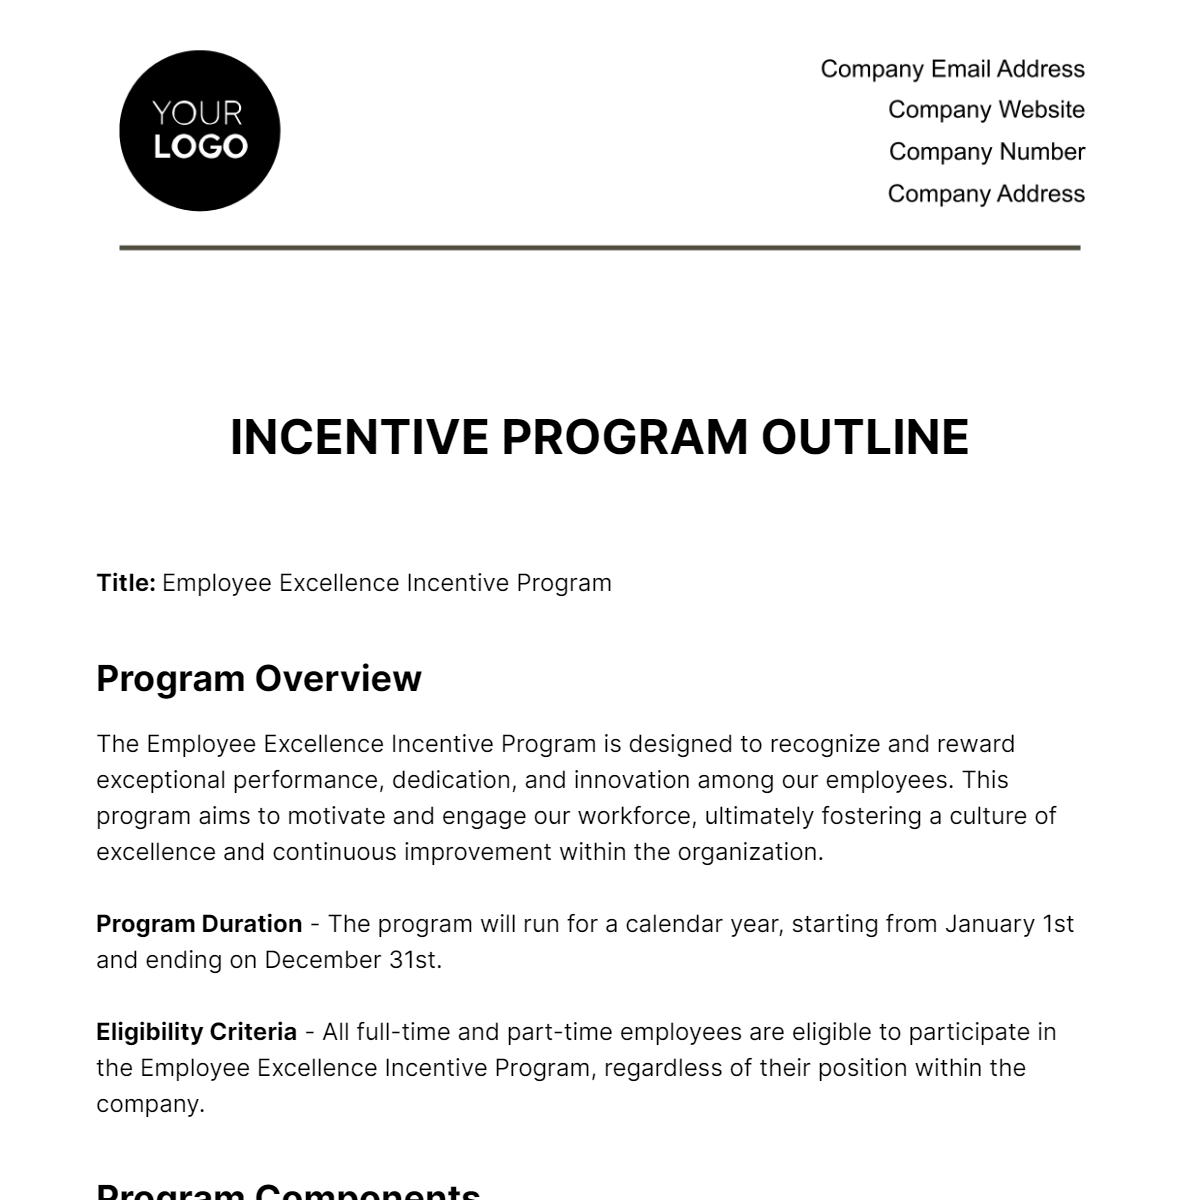 Free Incentive Program Outline HR Template